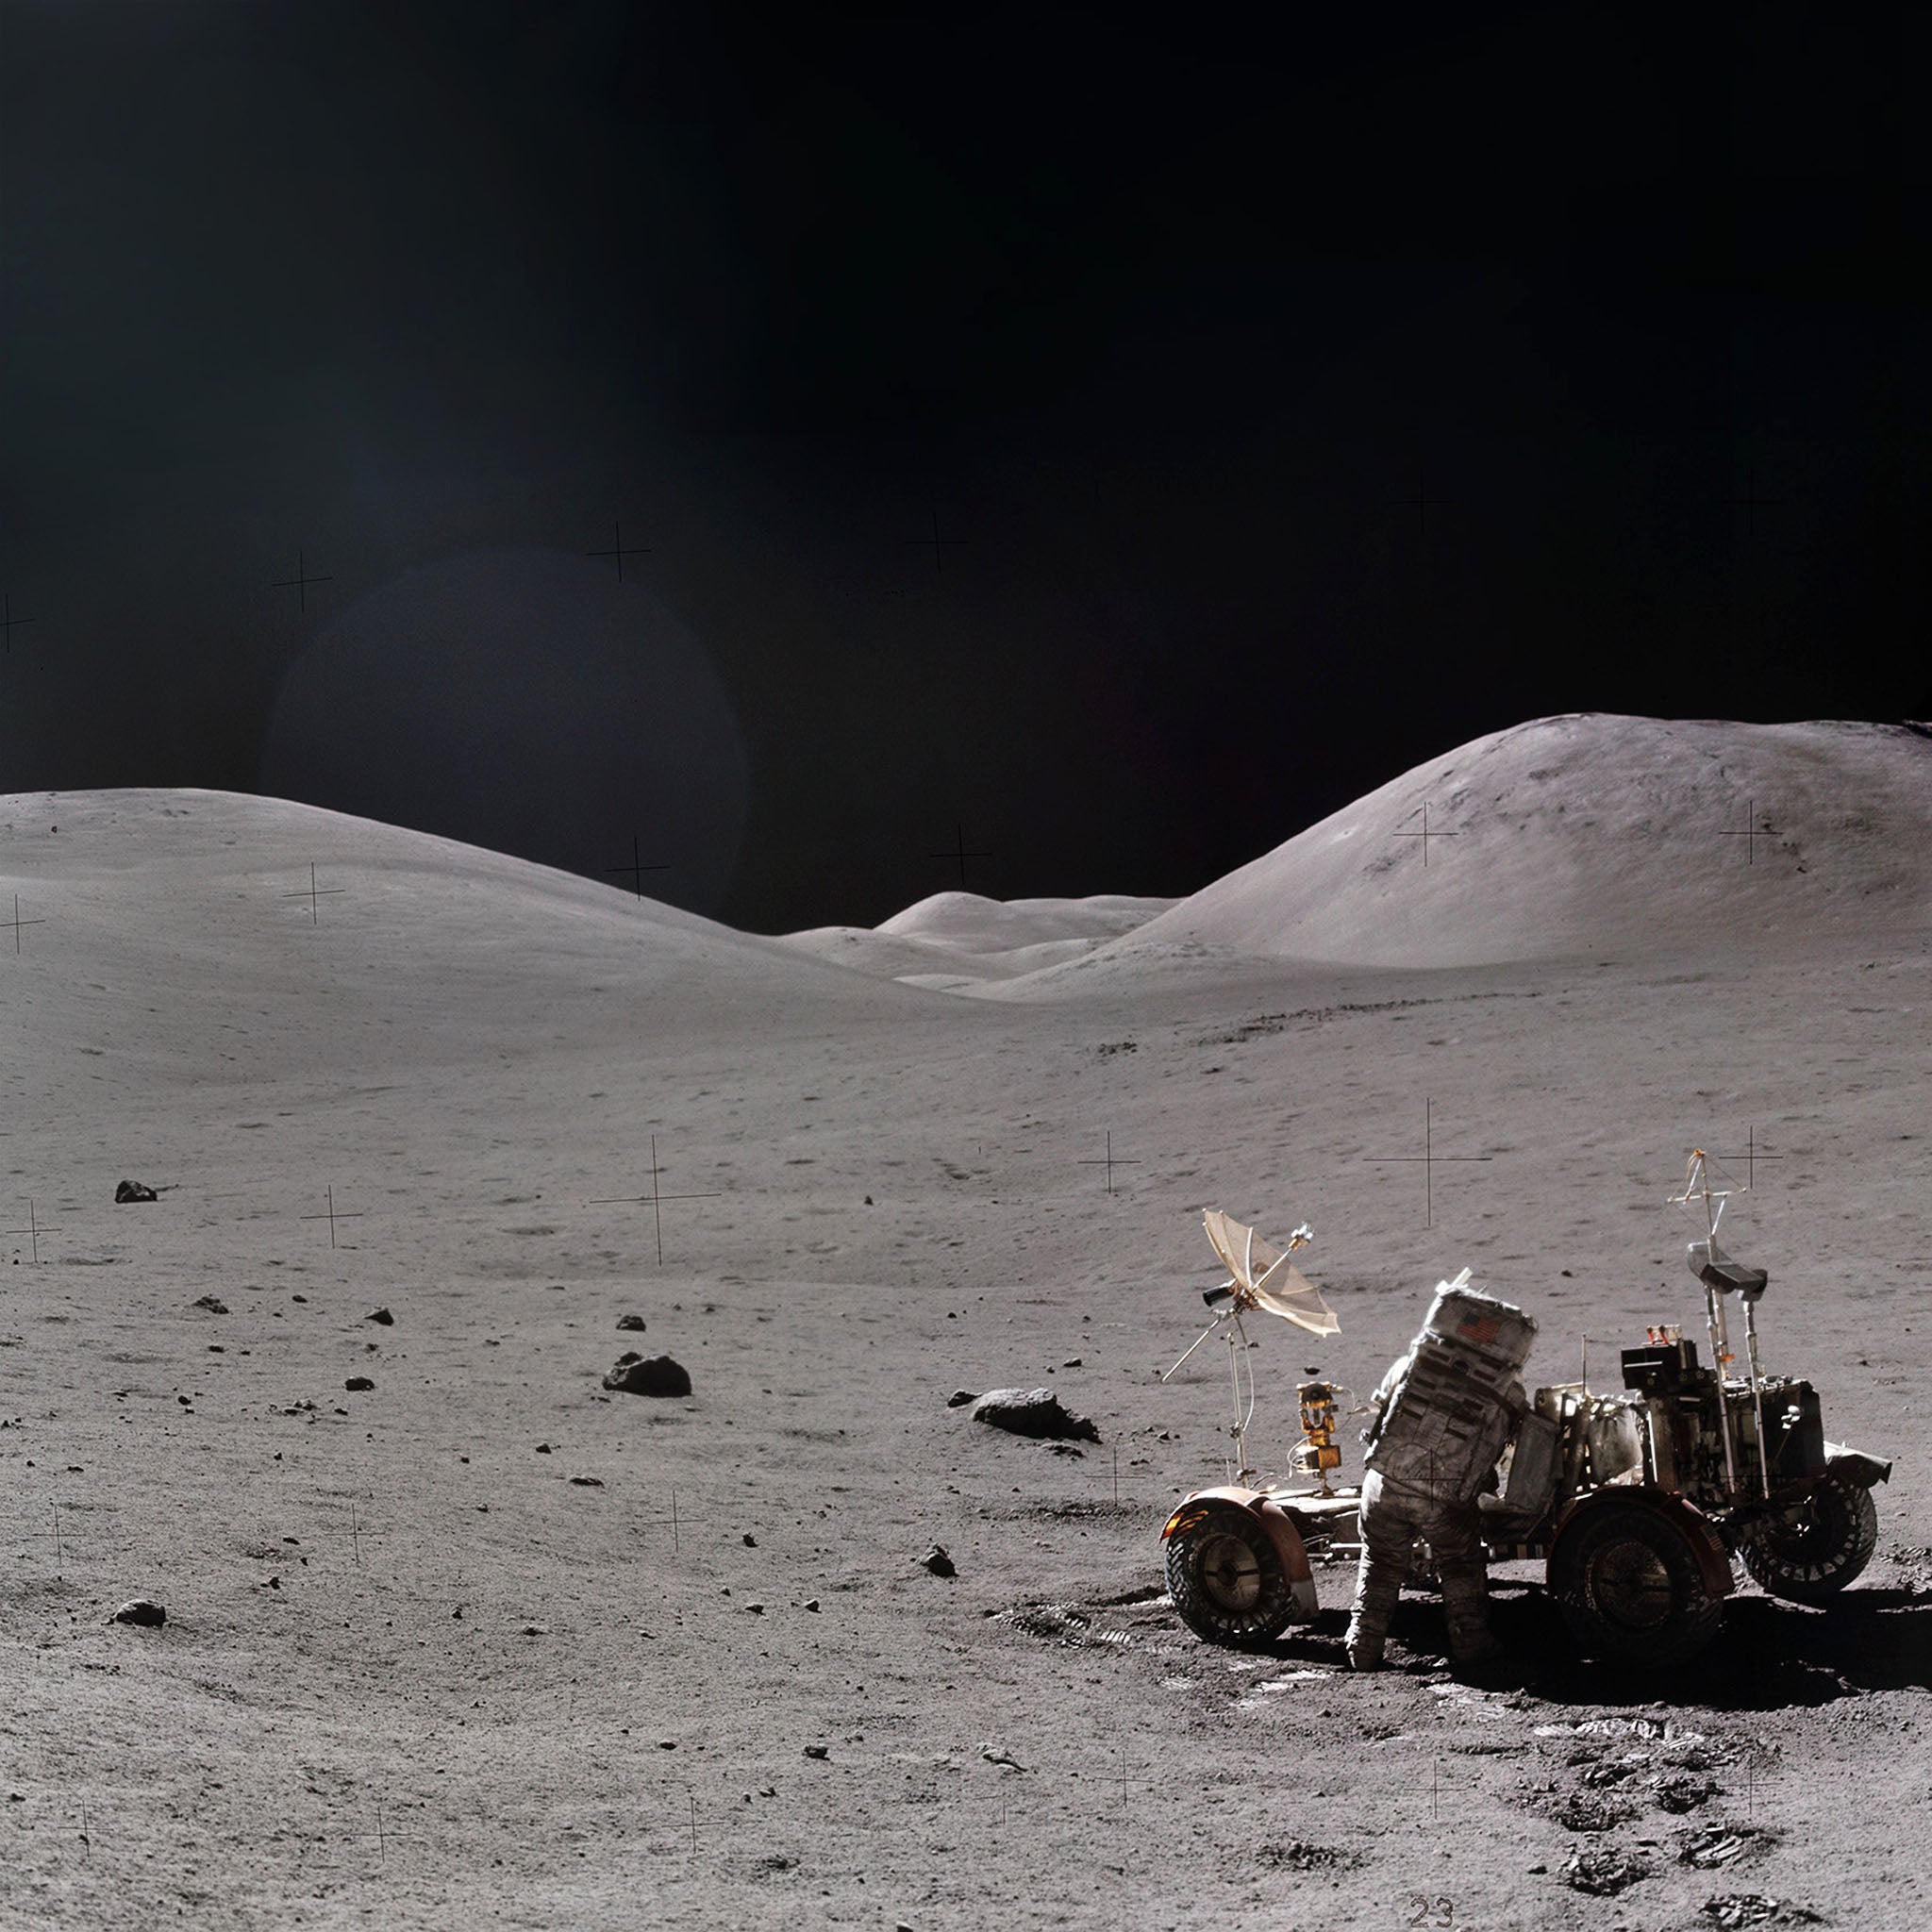 Apollo 17 Panorama - Station 7